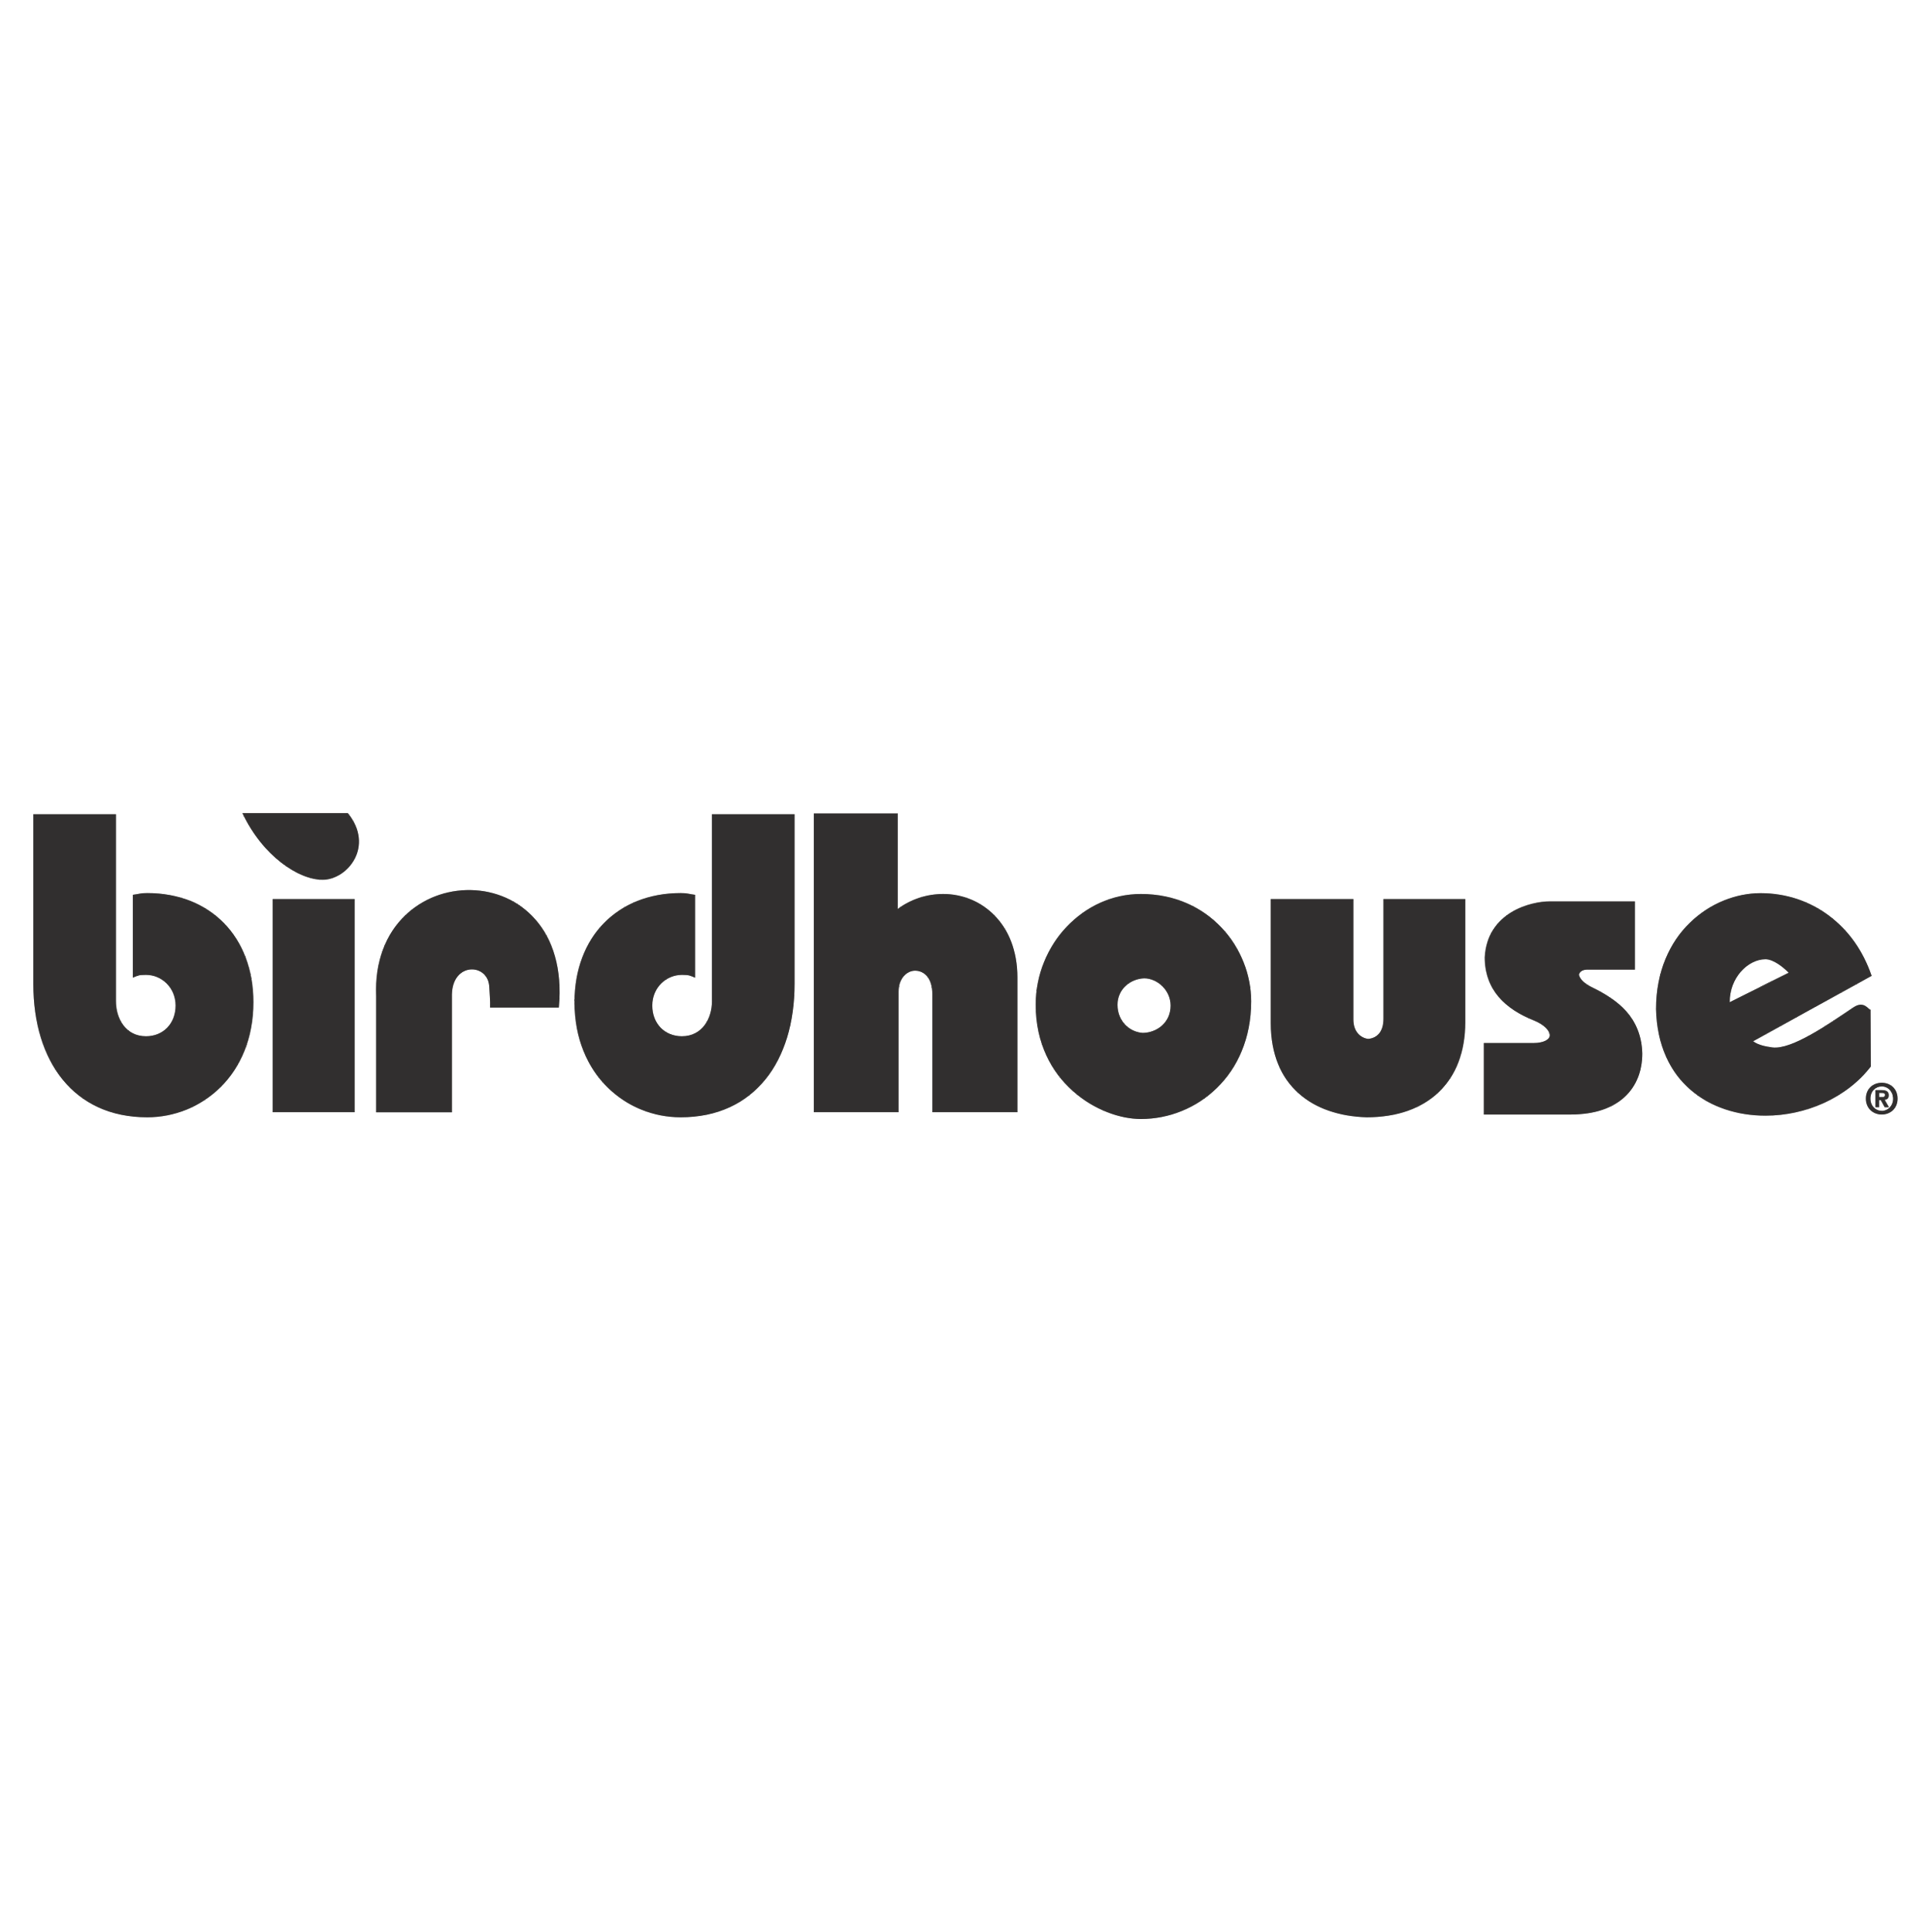 Birdhouse Skateboards Logo  Transparent Photo